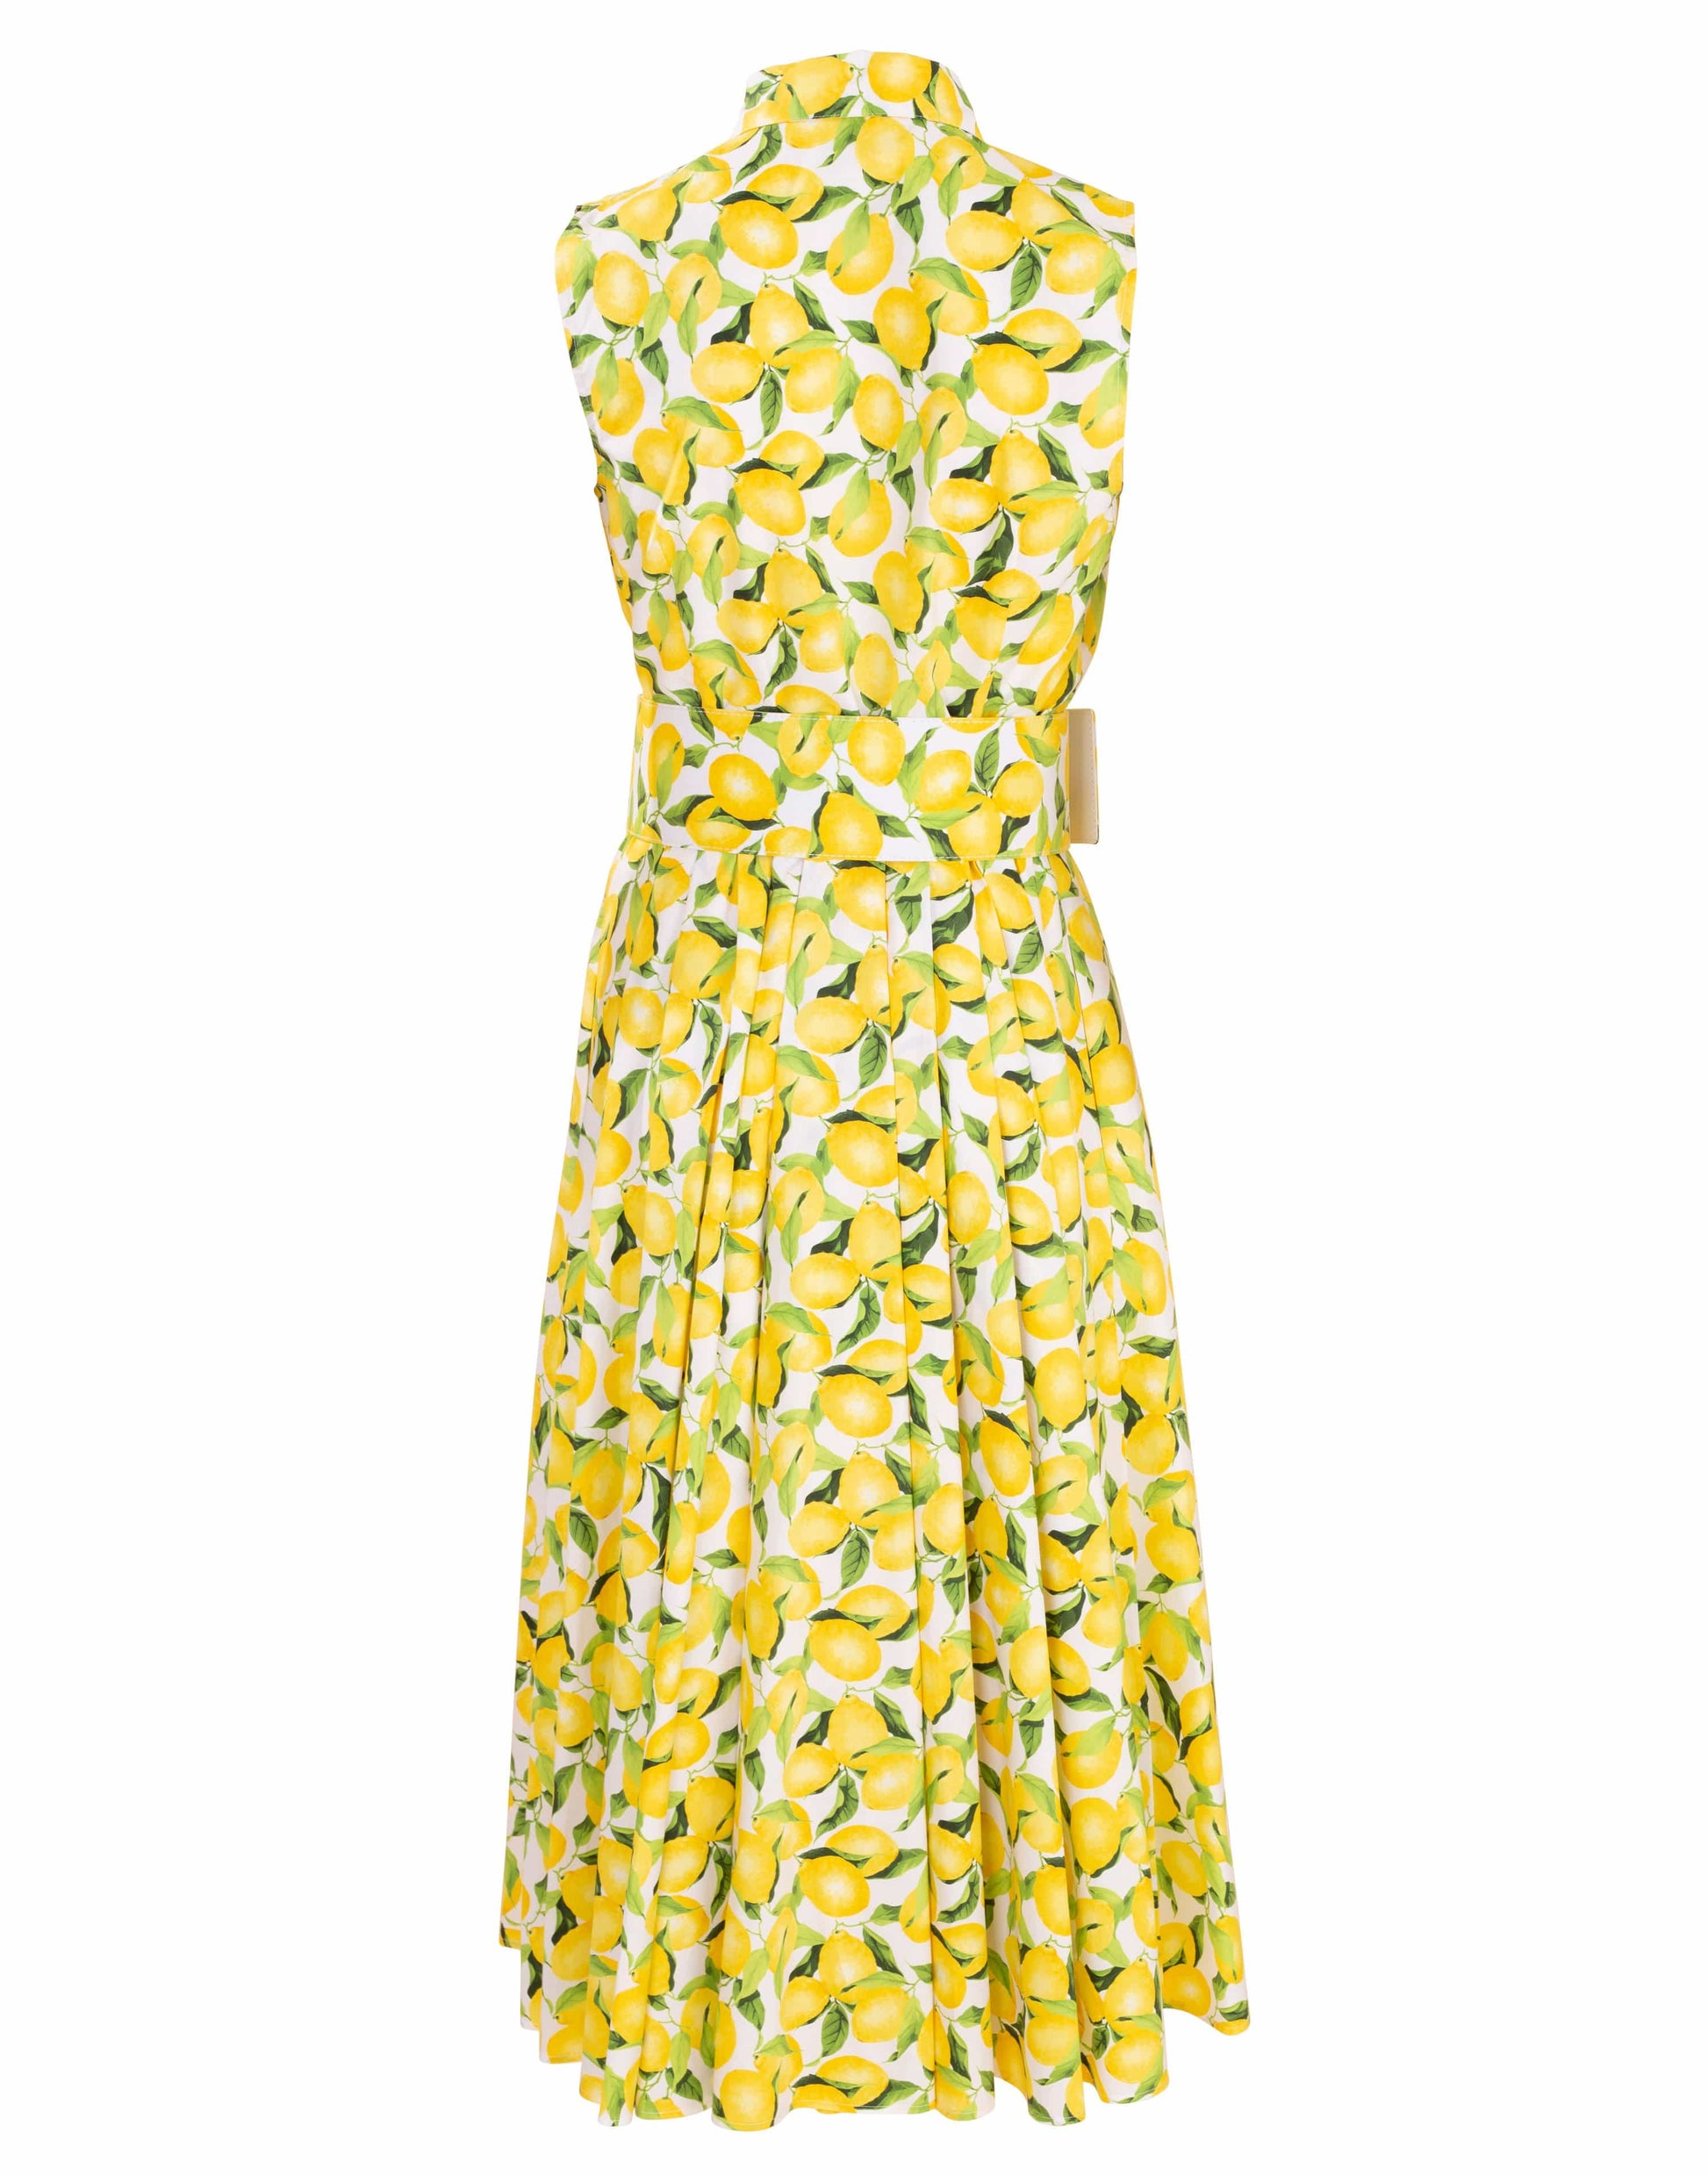 MICHAEL KORS-Sleeveless Lemon Print Belted Shirt Dress-